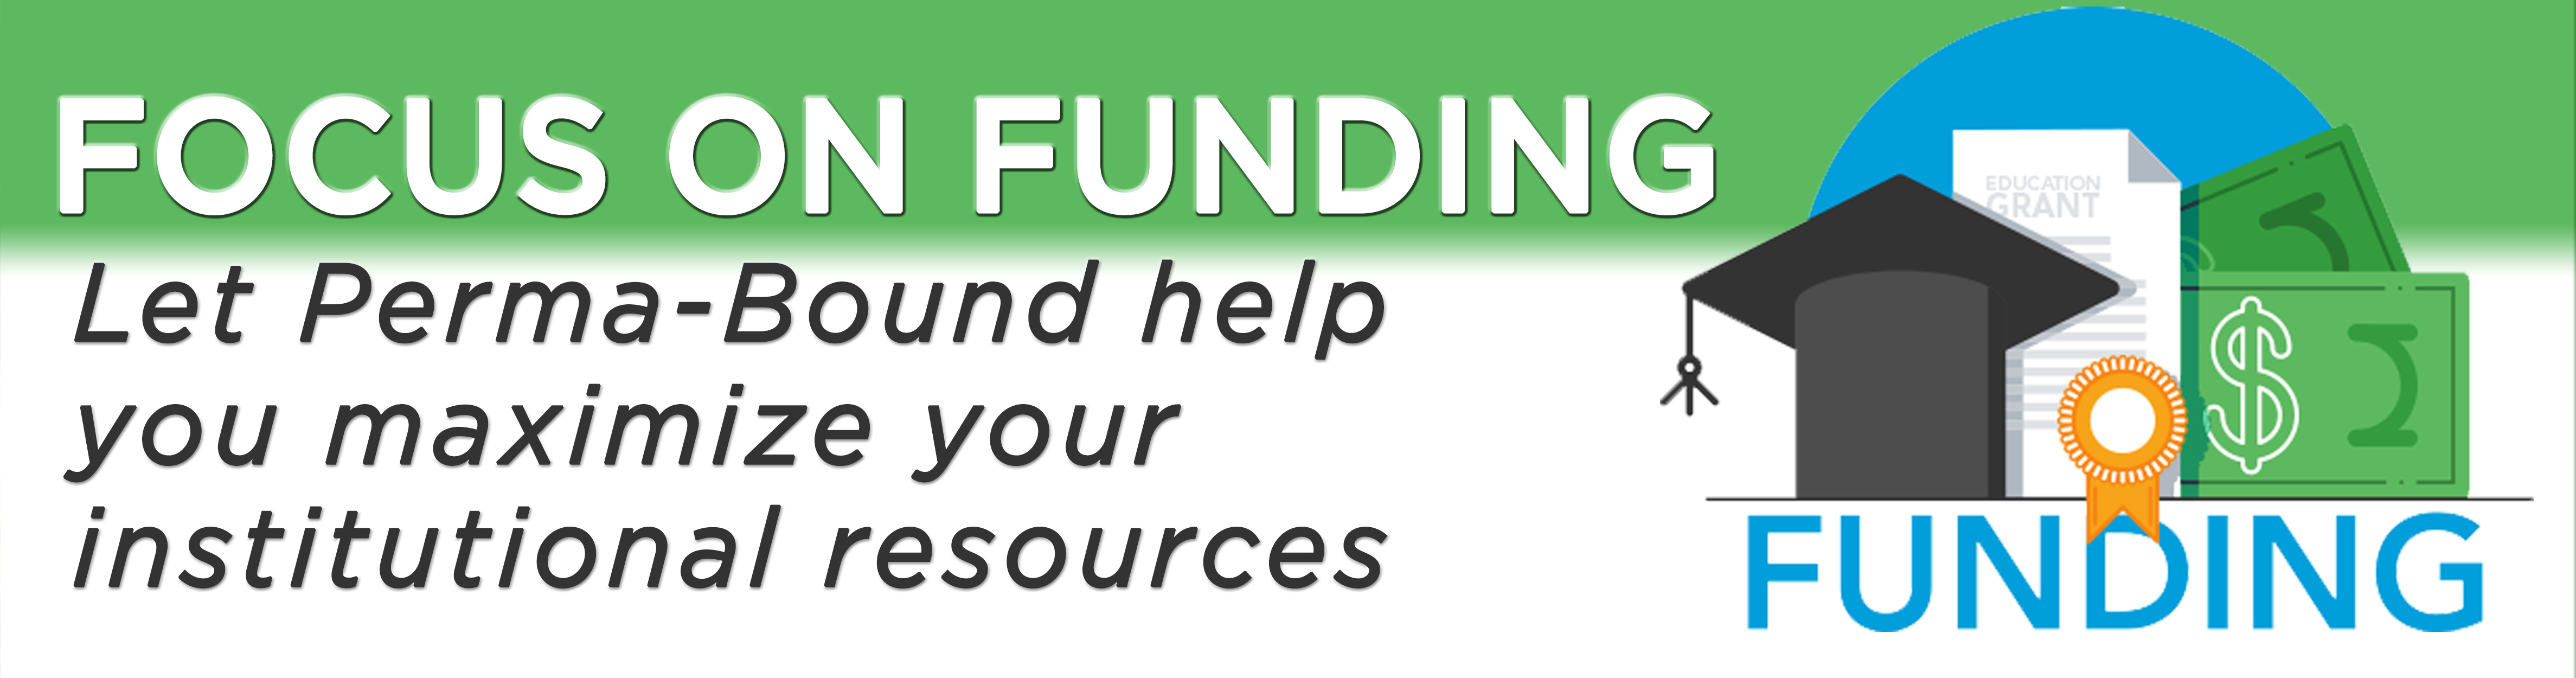 Grants and Fundings